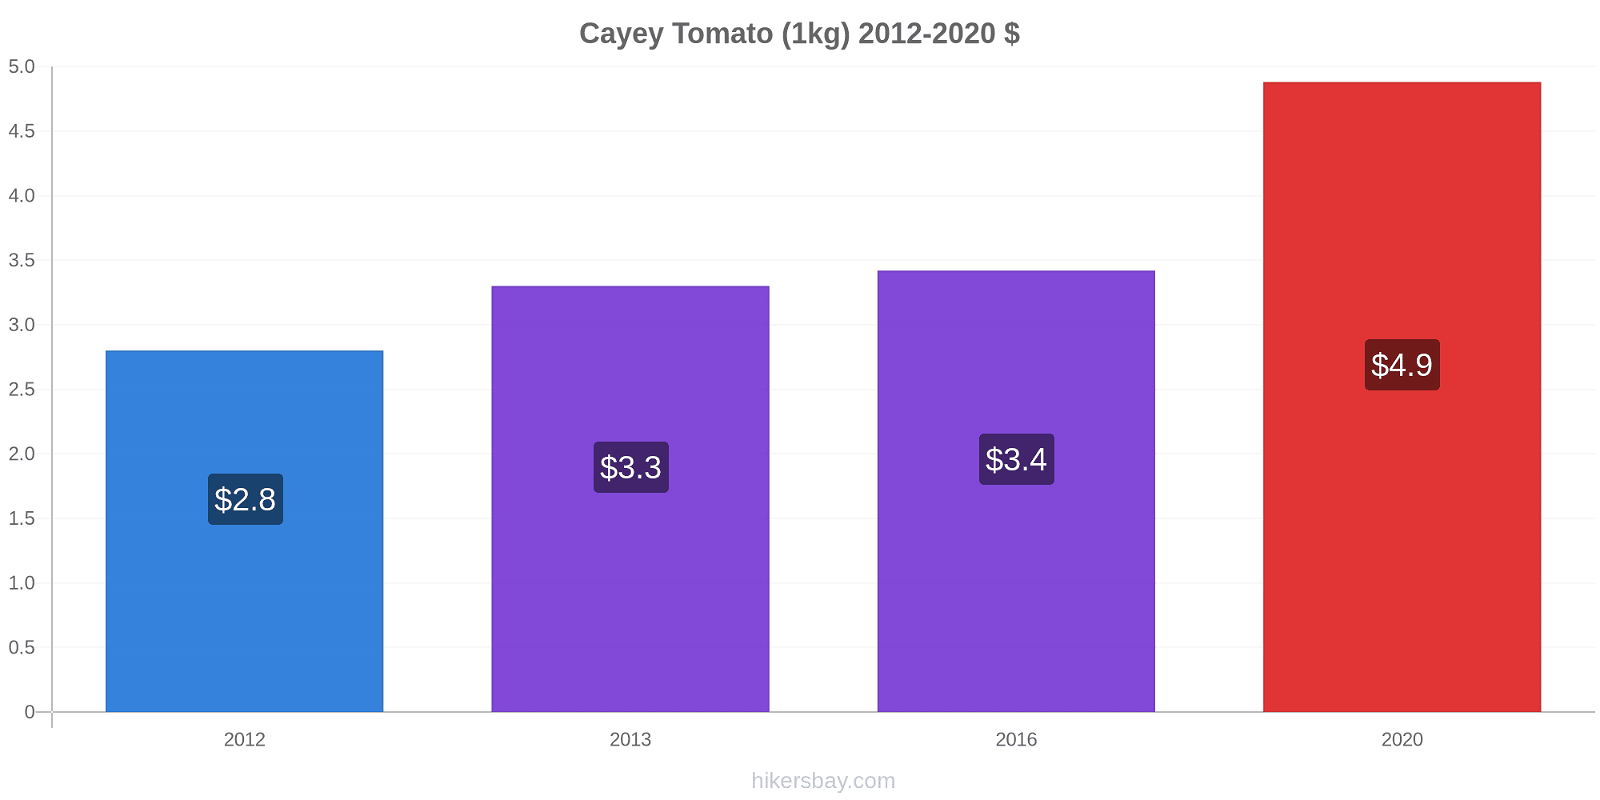 Cayey price changes Tomato (1kg) hikersbay.com